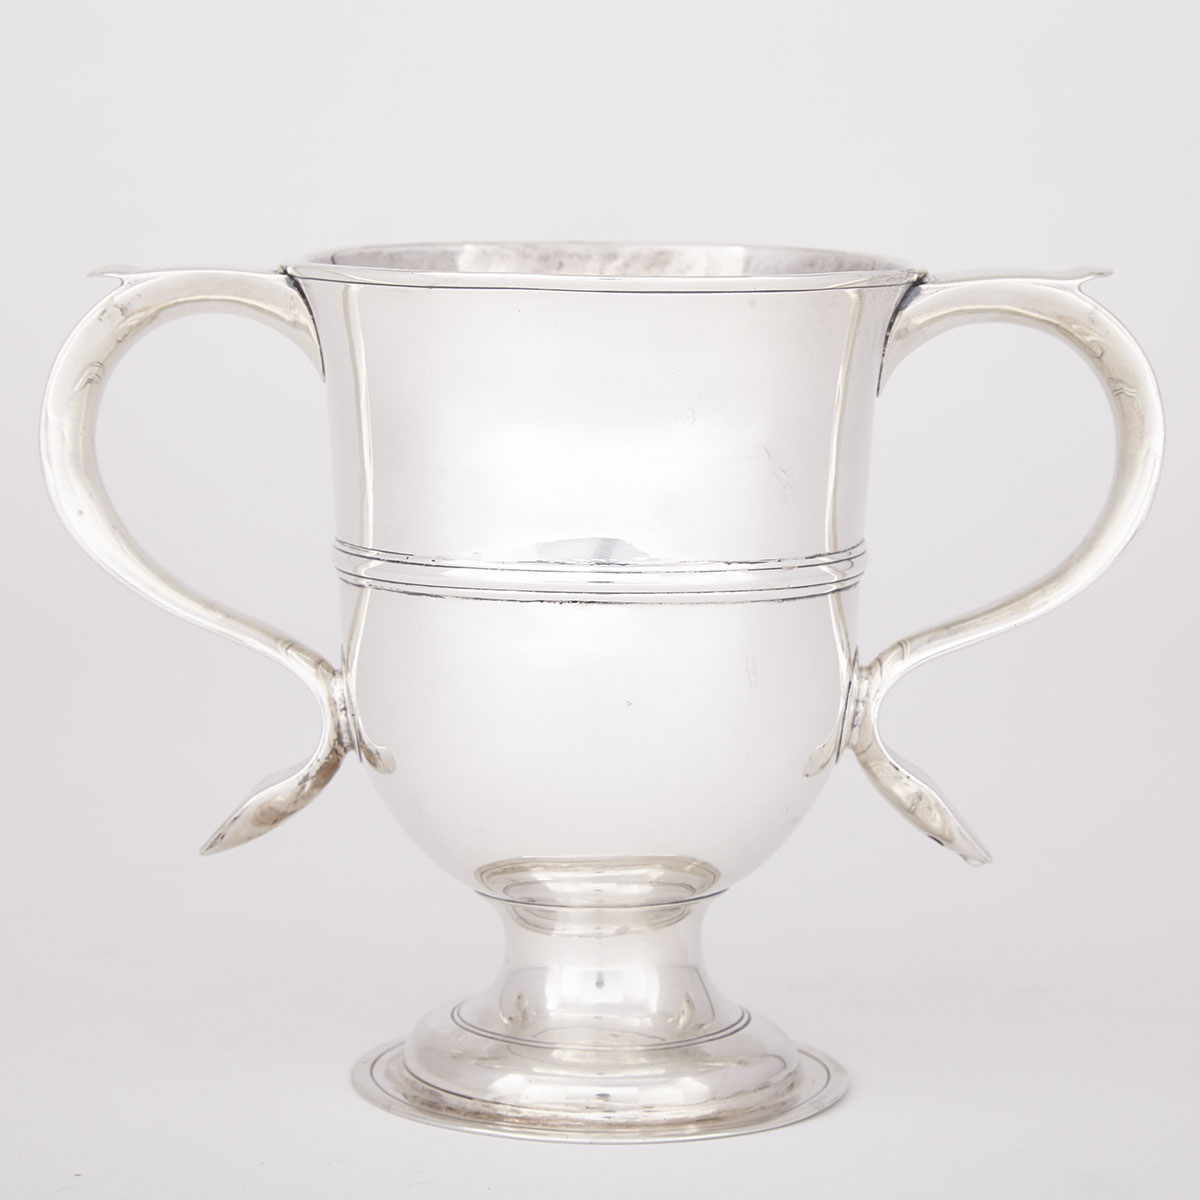 George III Silver Two-Handled Cup, Thomas Wallis I, London, 1781